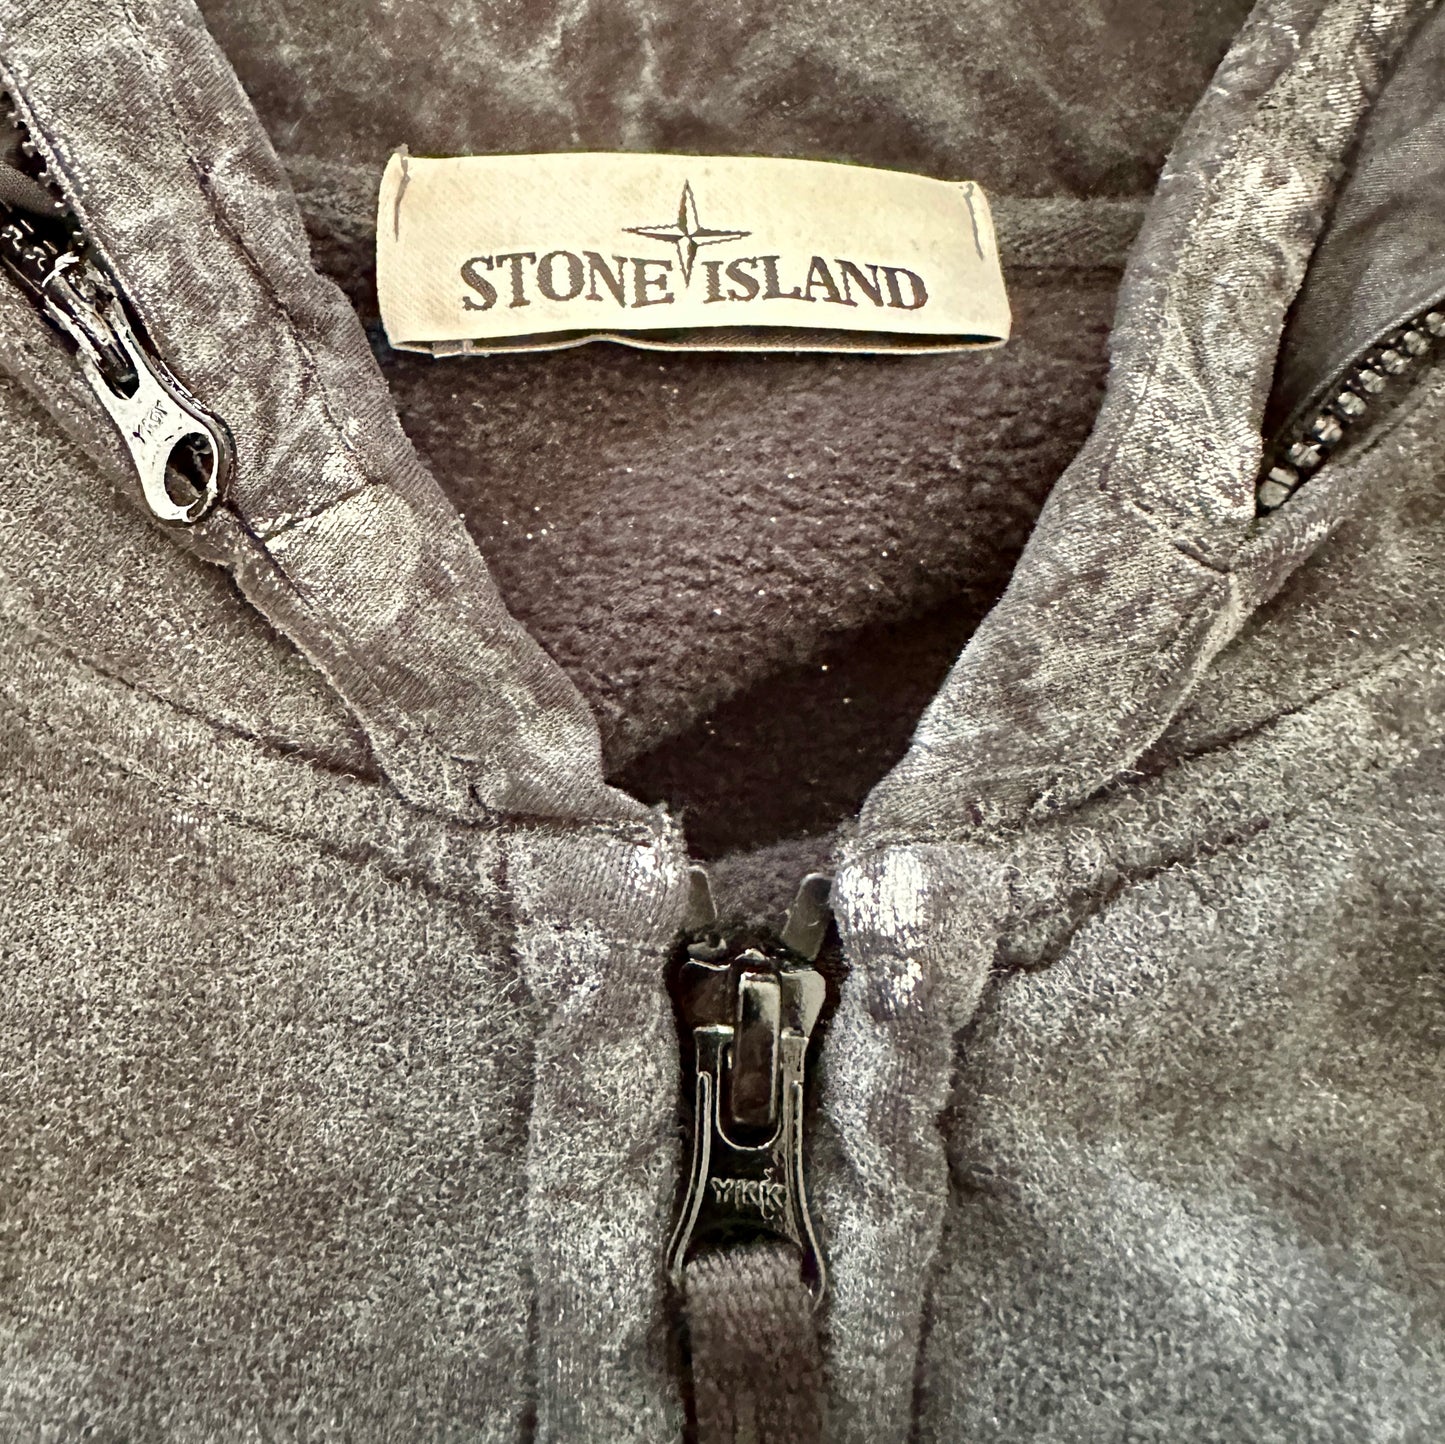 Stone Island 2017 Frost Finish Hooded Zip Sweatjacket - M